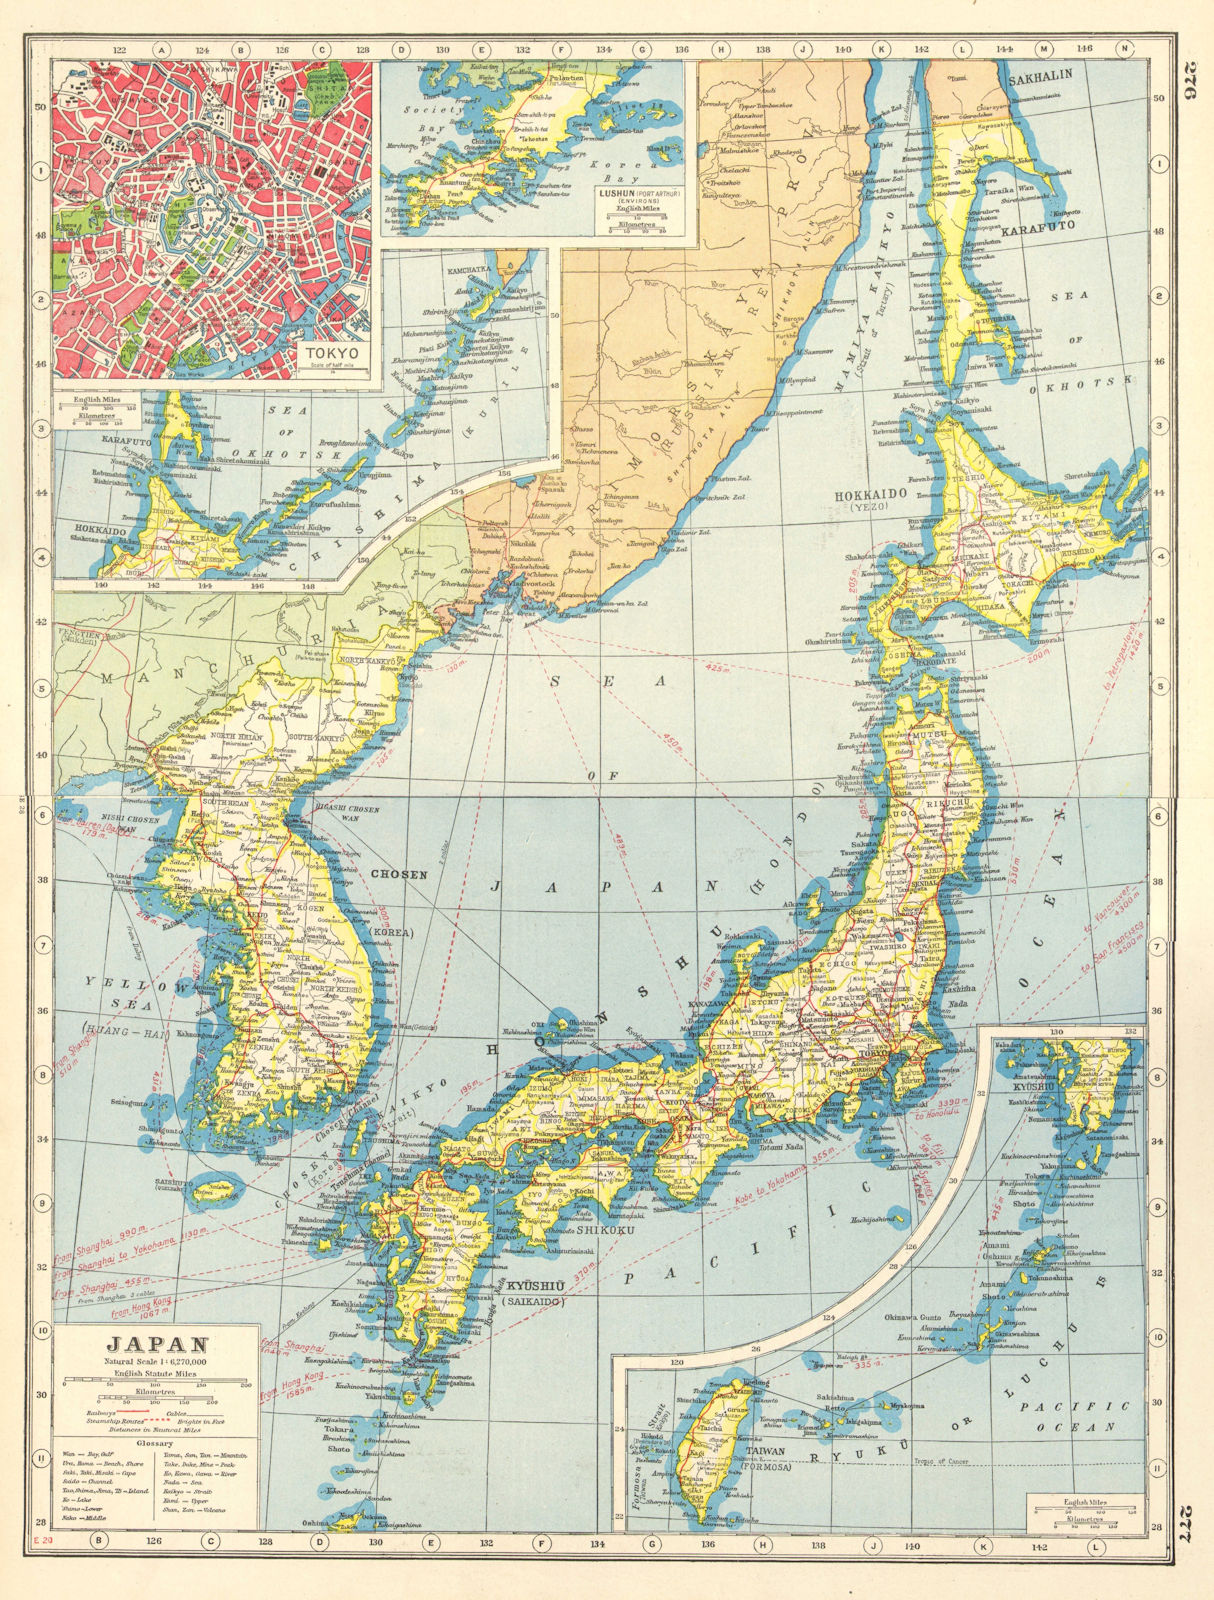 JAPAN KOREA TAIWAN. Railways steamship routes. Chosen. Tokyo plan 1920 old map